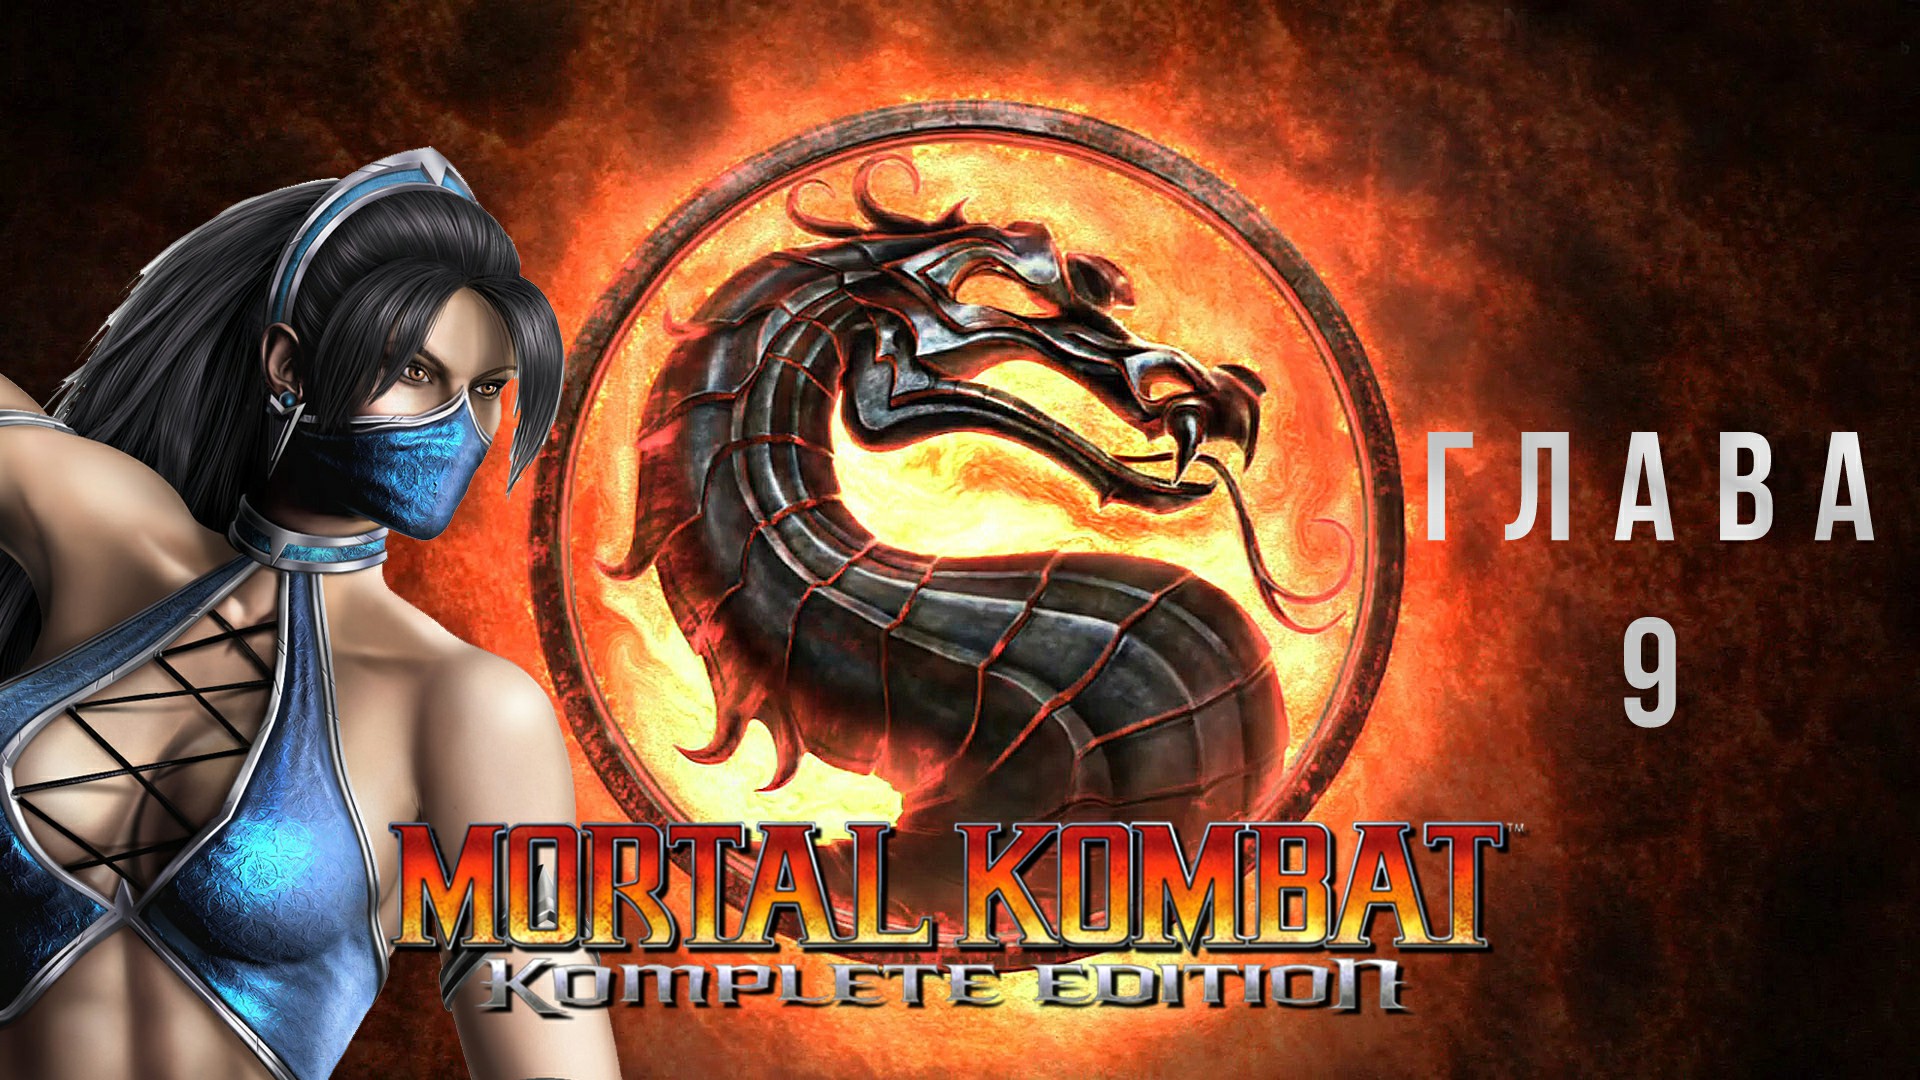 Mortal Kombat Komplete Edition Глава 9 - Kitana без комментариев